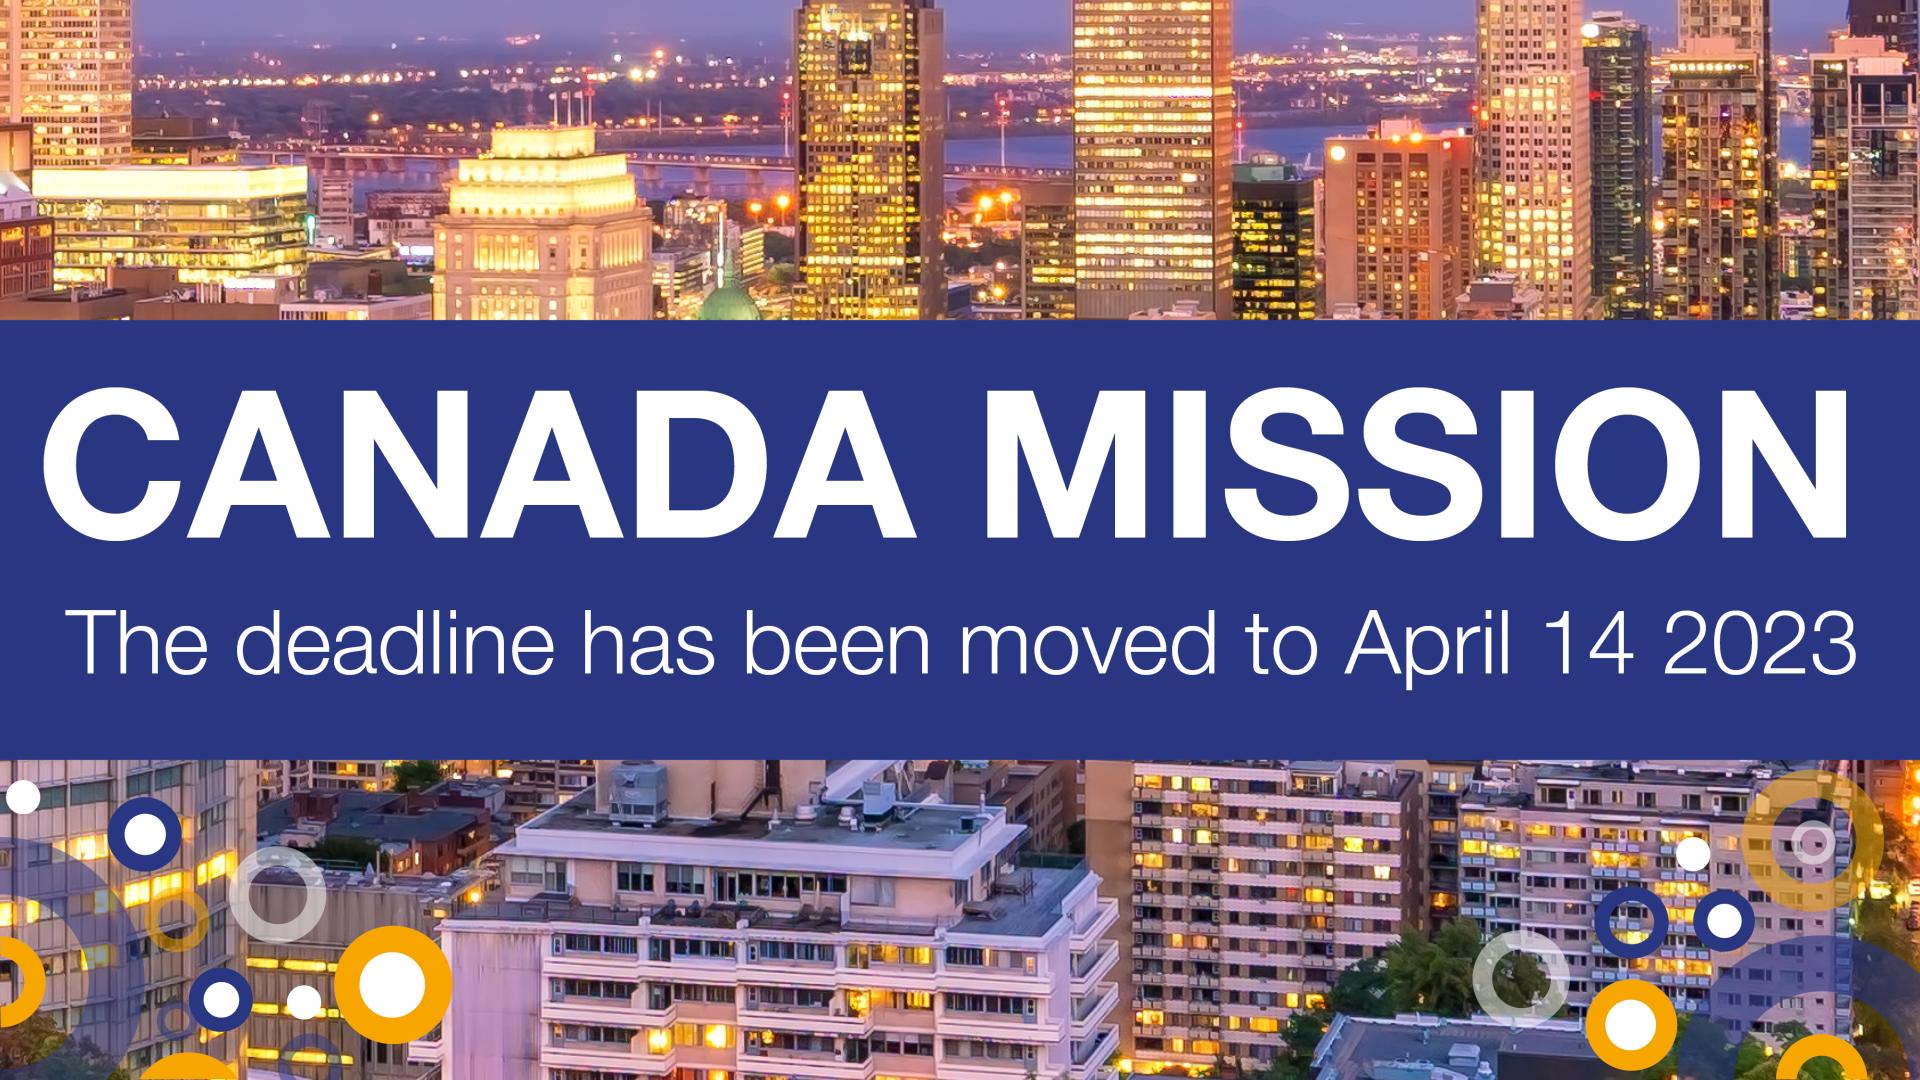 Eu-Alliance_Canada Mission_April Deadline